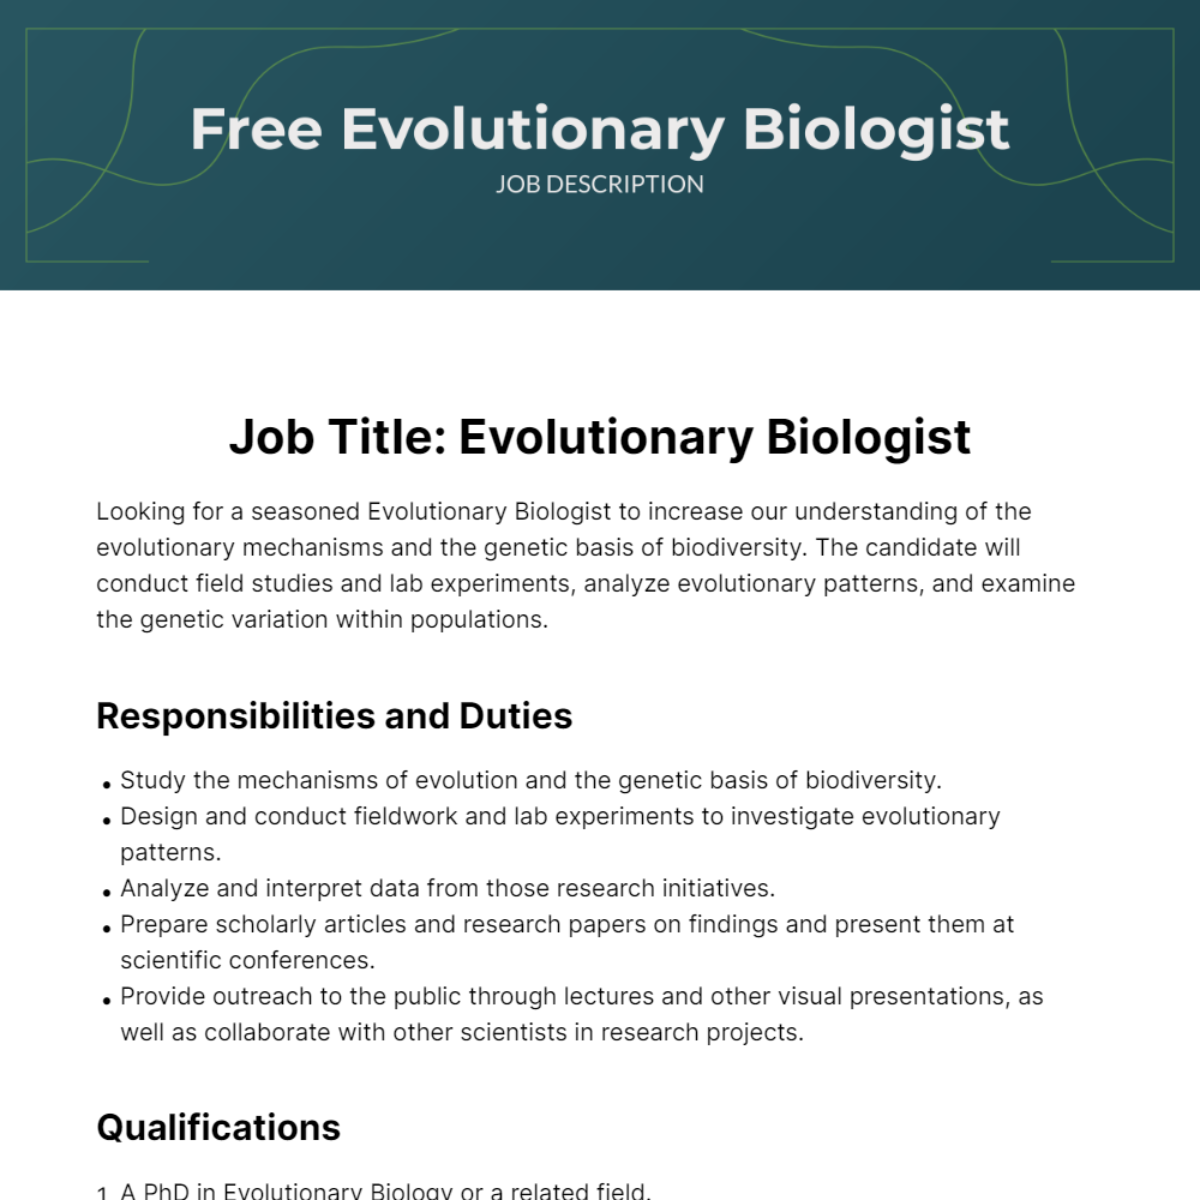 Free Evolutionary Biologist Job Description Template